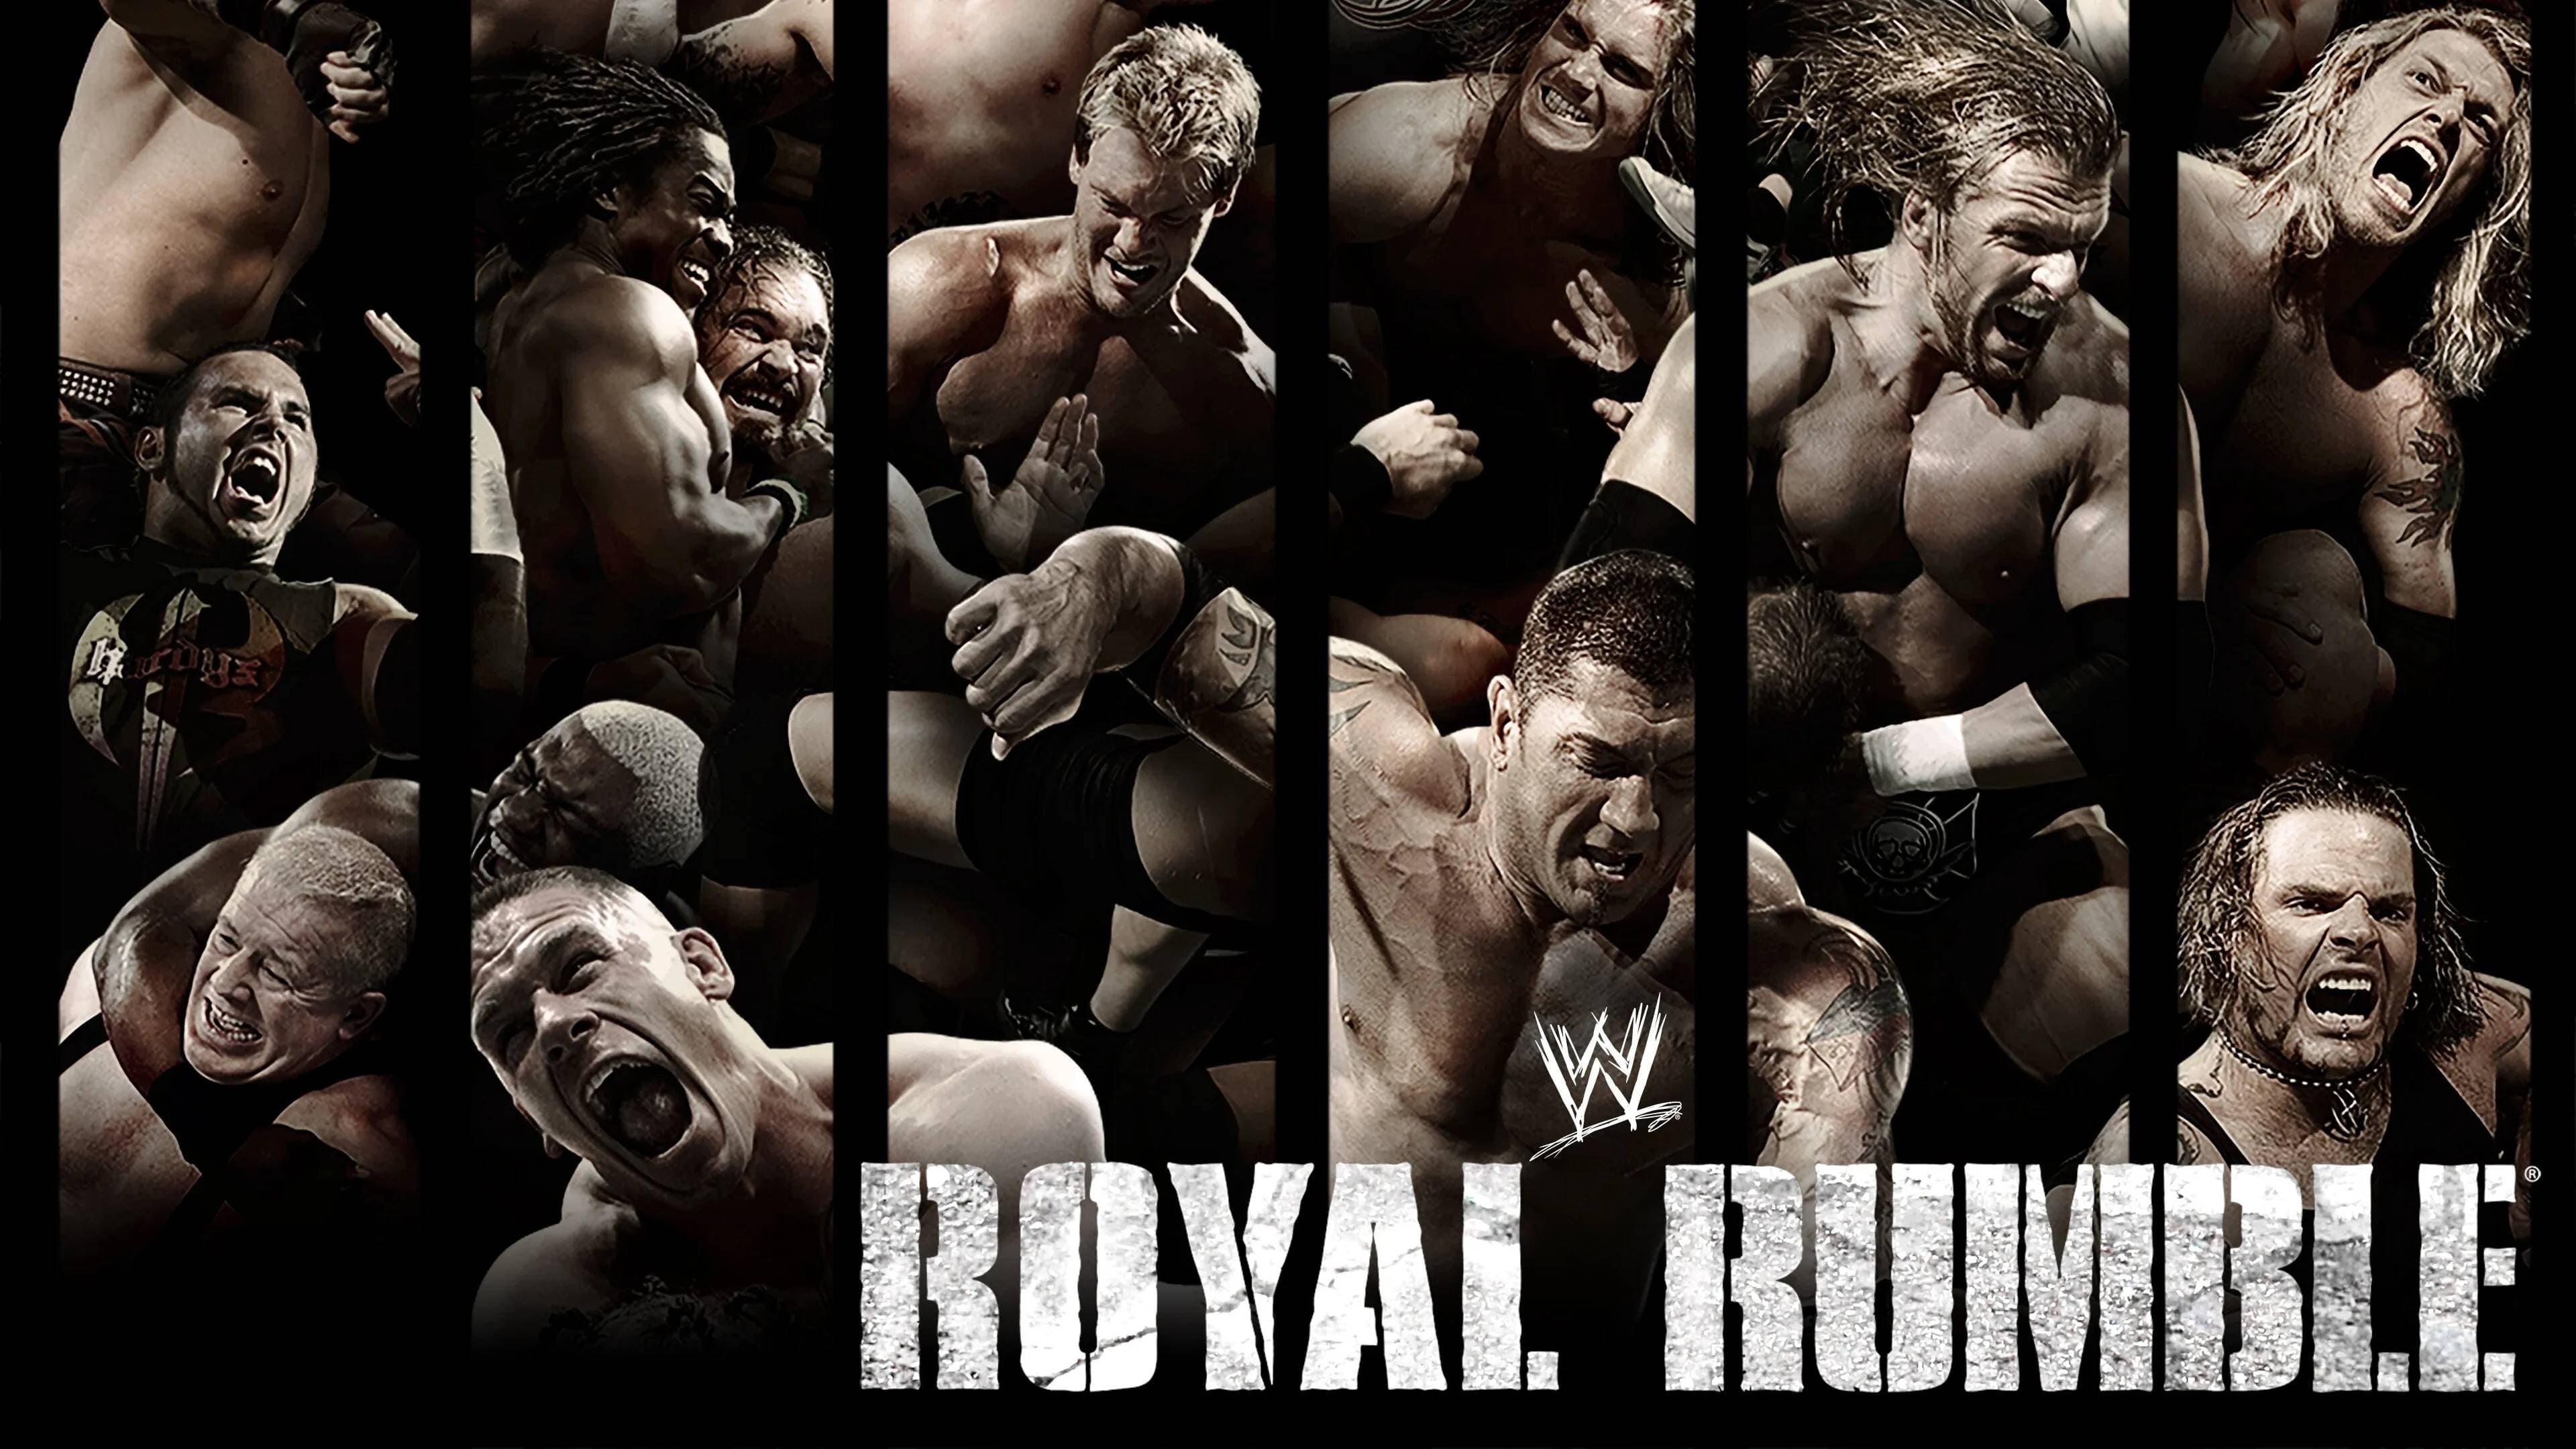 WWE Royal Rumble 2009 backdrop